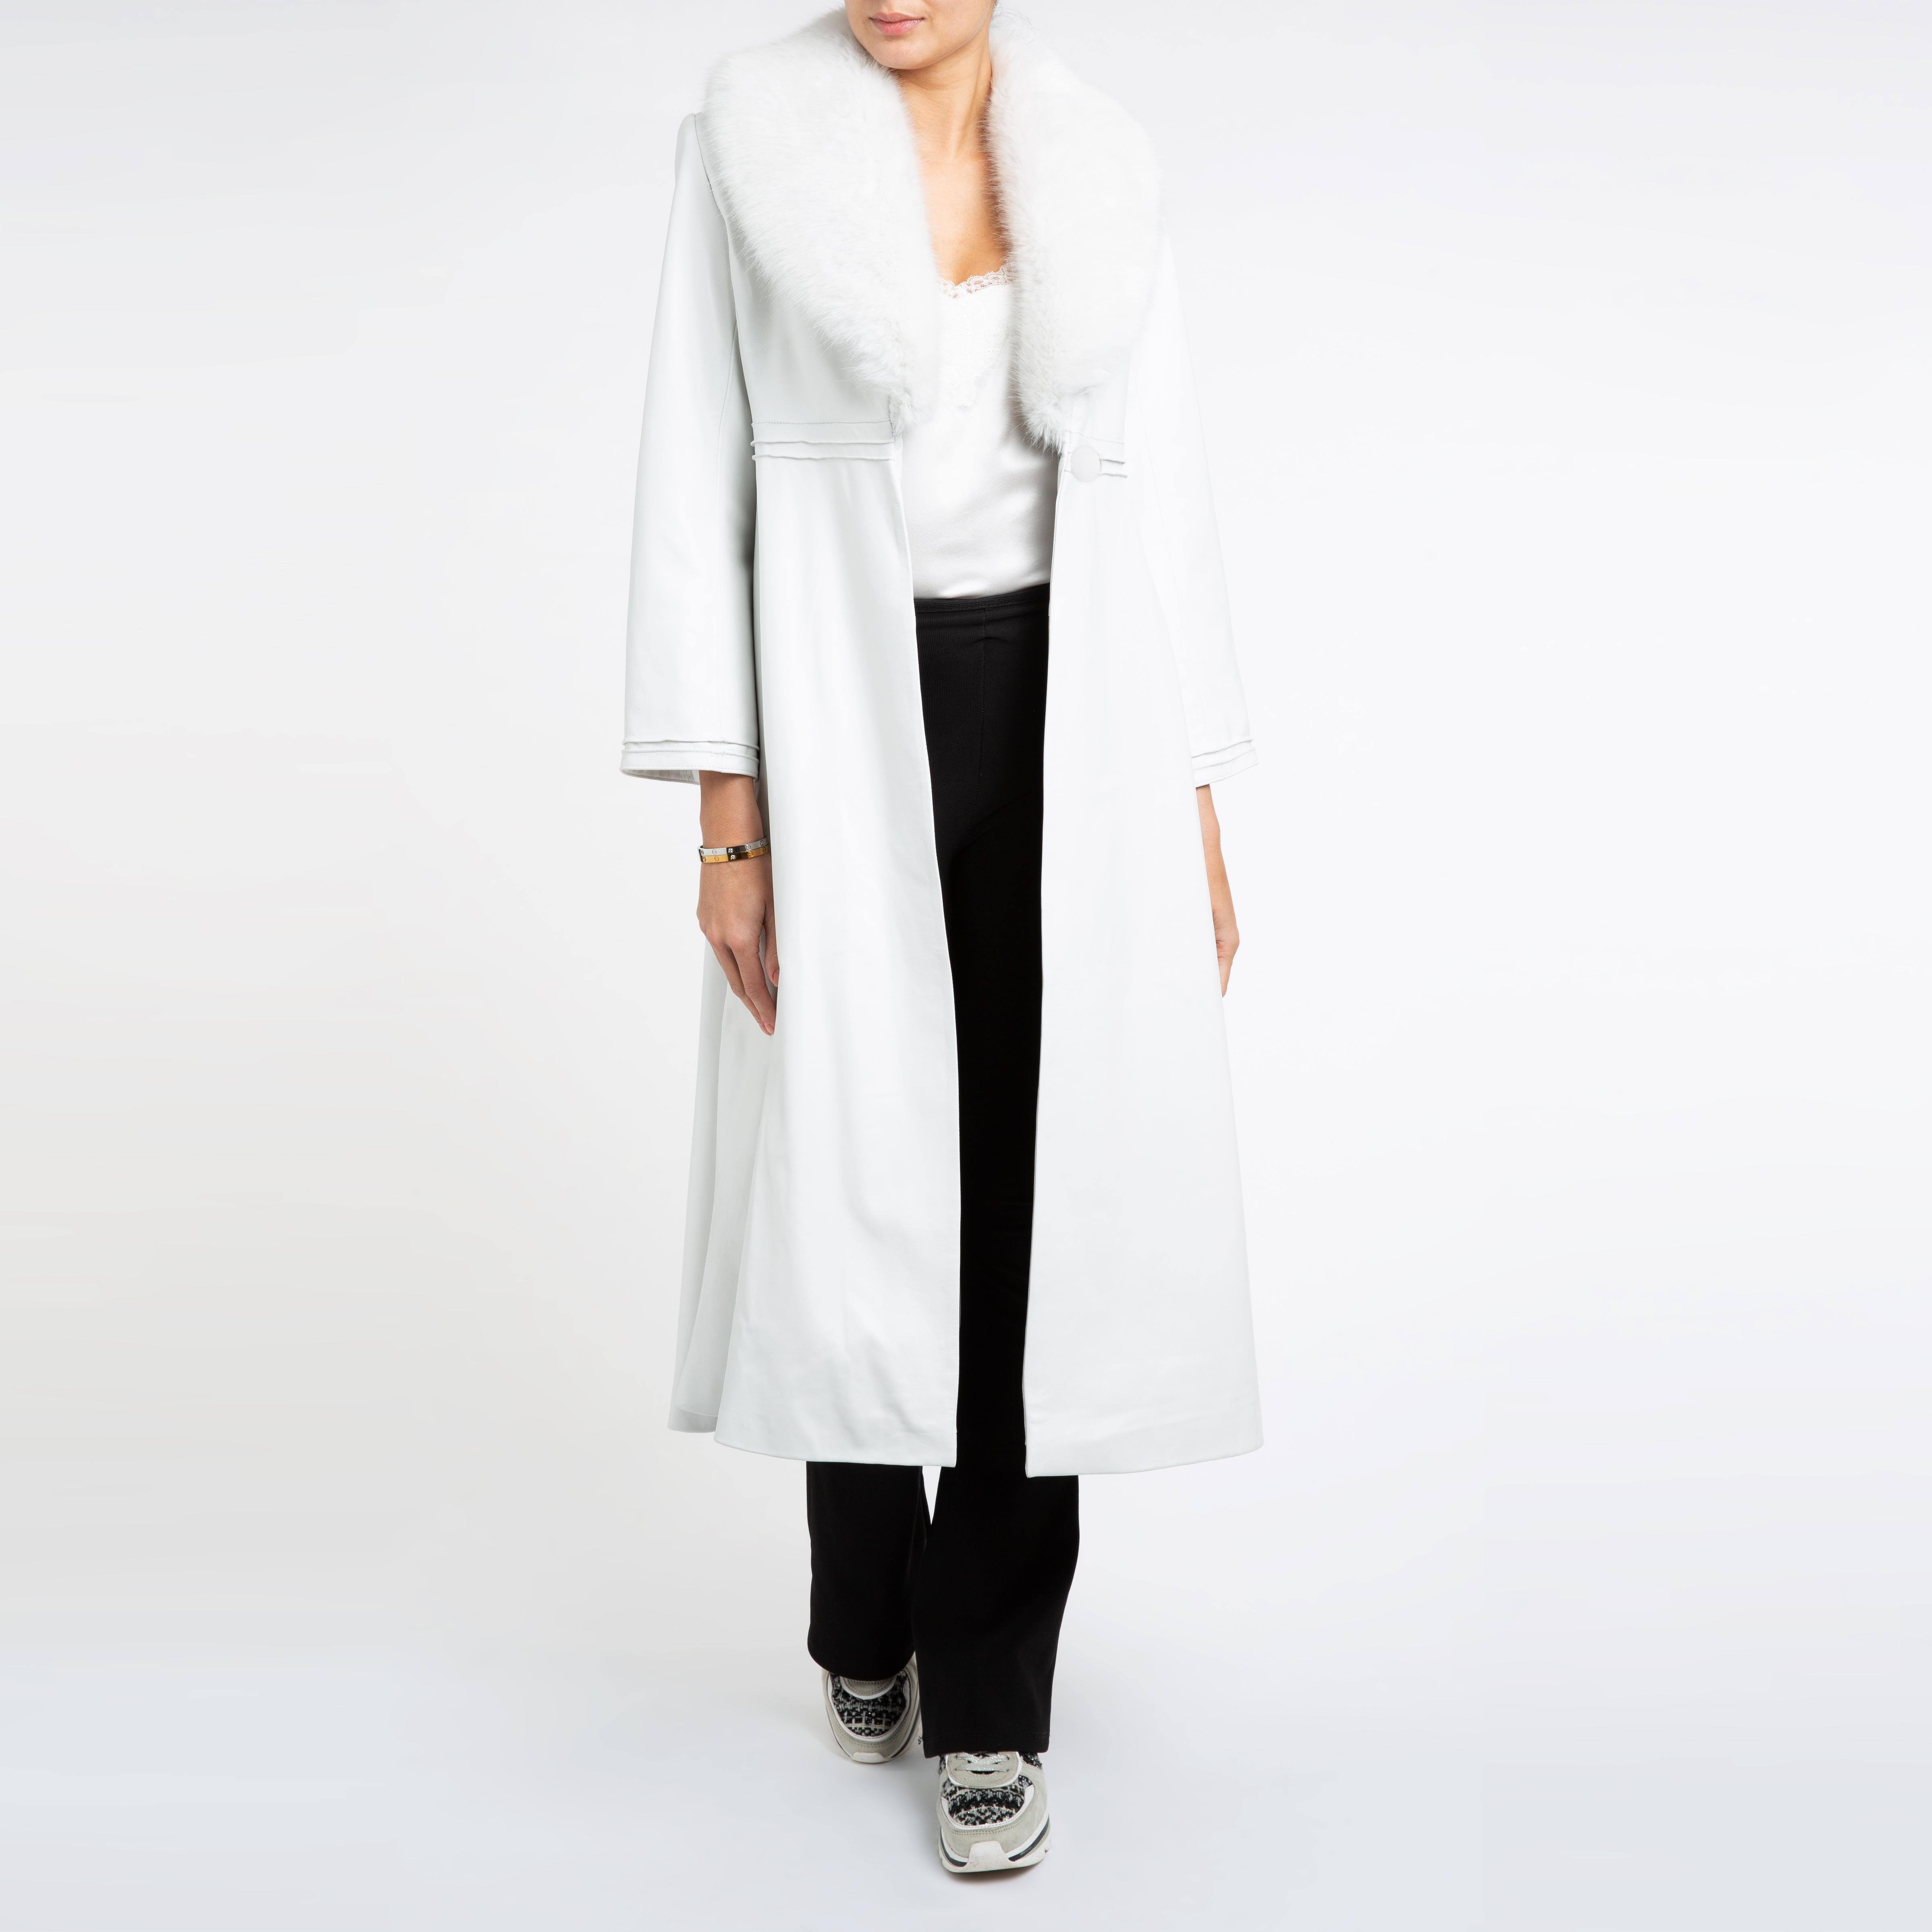 Verheyen London Edward Leather Coat in White with Faux Fur - Size uk 8  For Sale 6